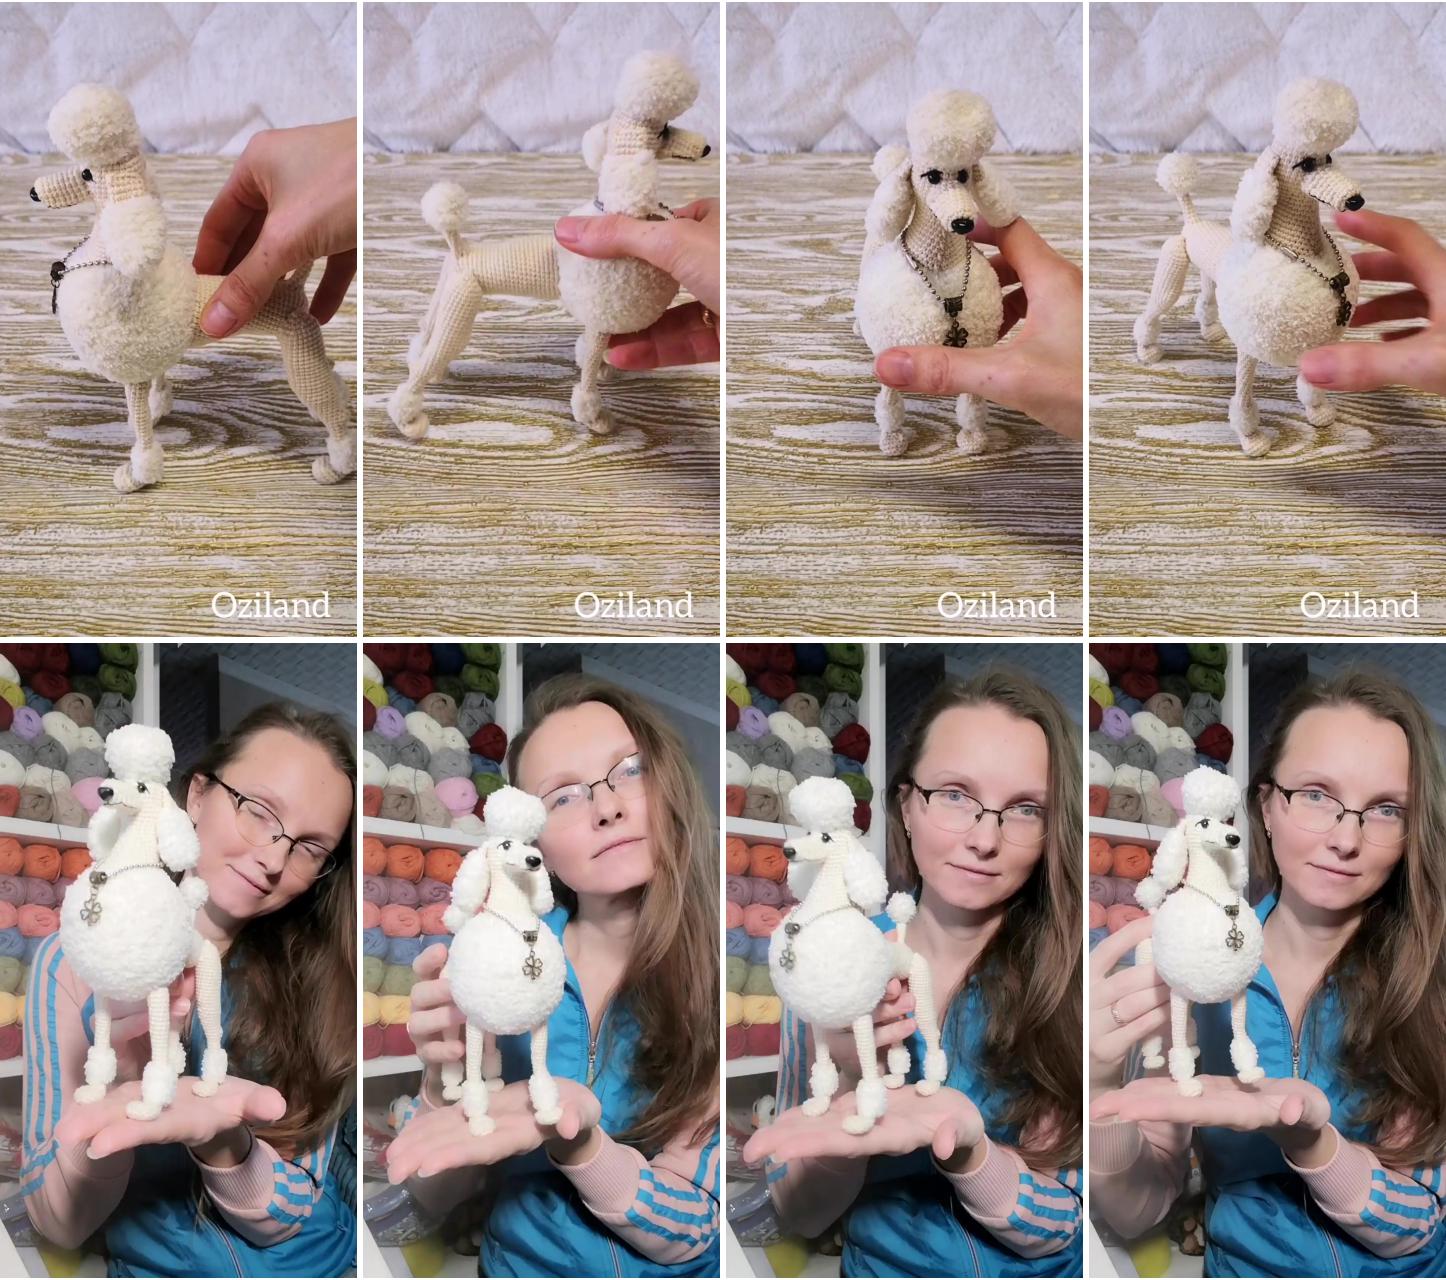 Crochet amigurumi pattern: leonardo the poodle dog pdf by oziland; leonardo the poodle toy, crochet amigurumi pattern: dog pattern pdf, language - english, german